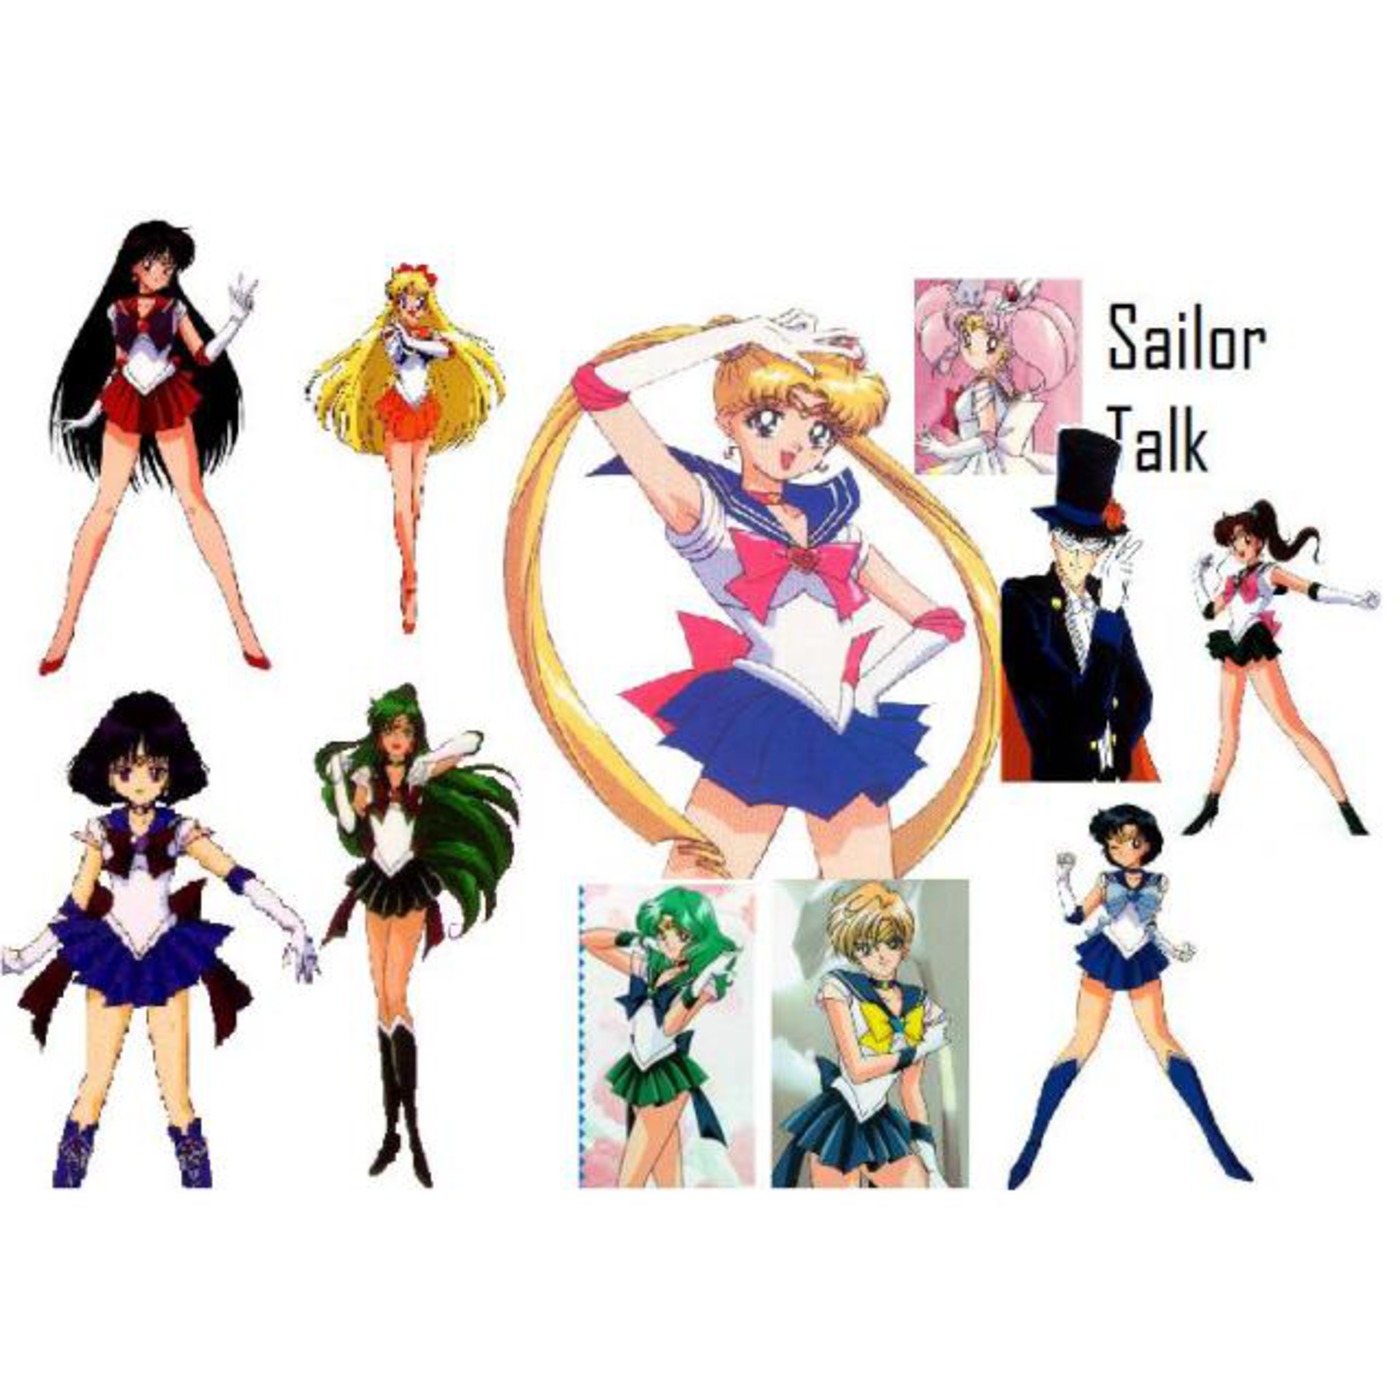 Sailor Talk!